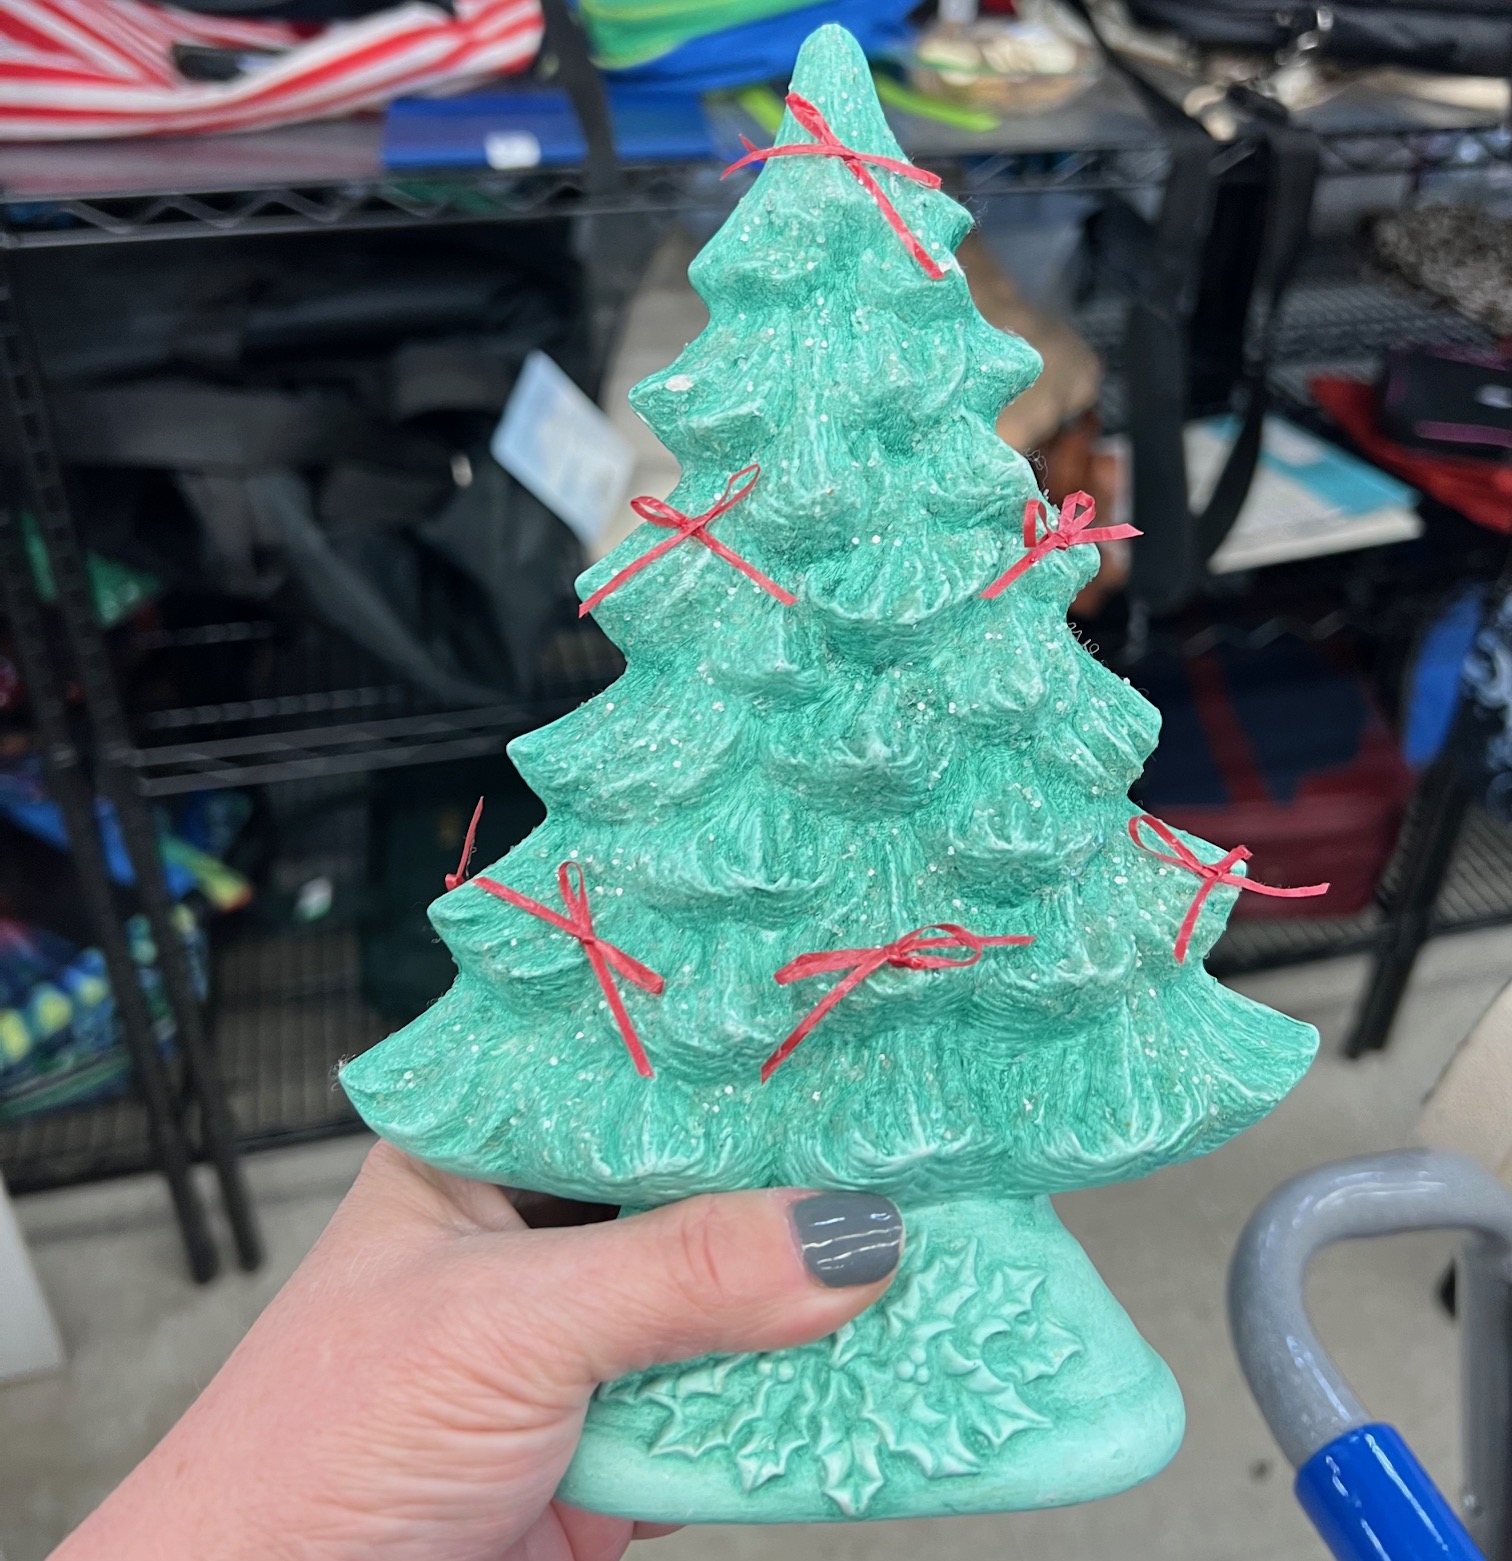 Ohio State LED Ceramic Christmas Tree